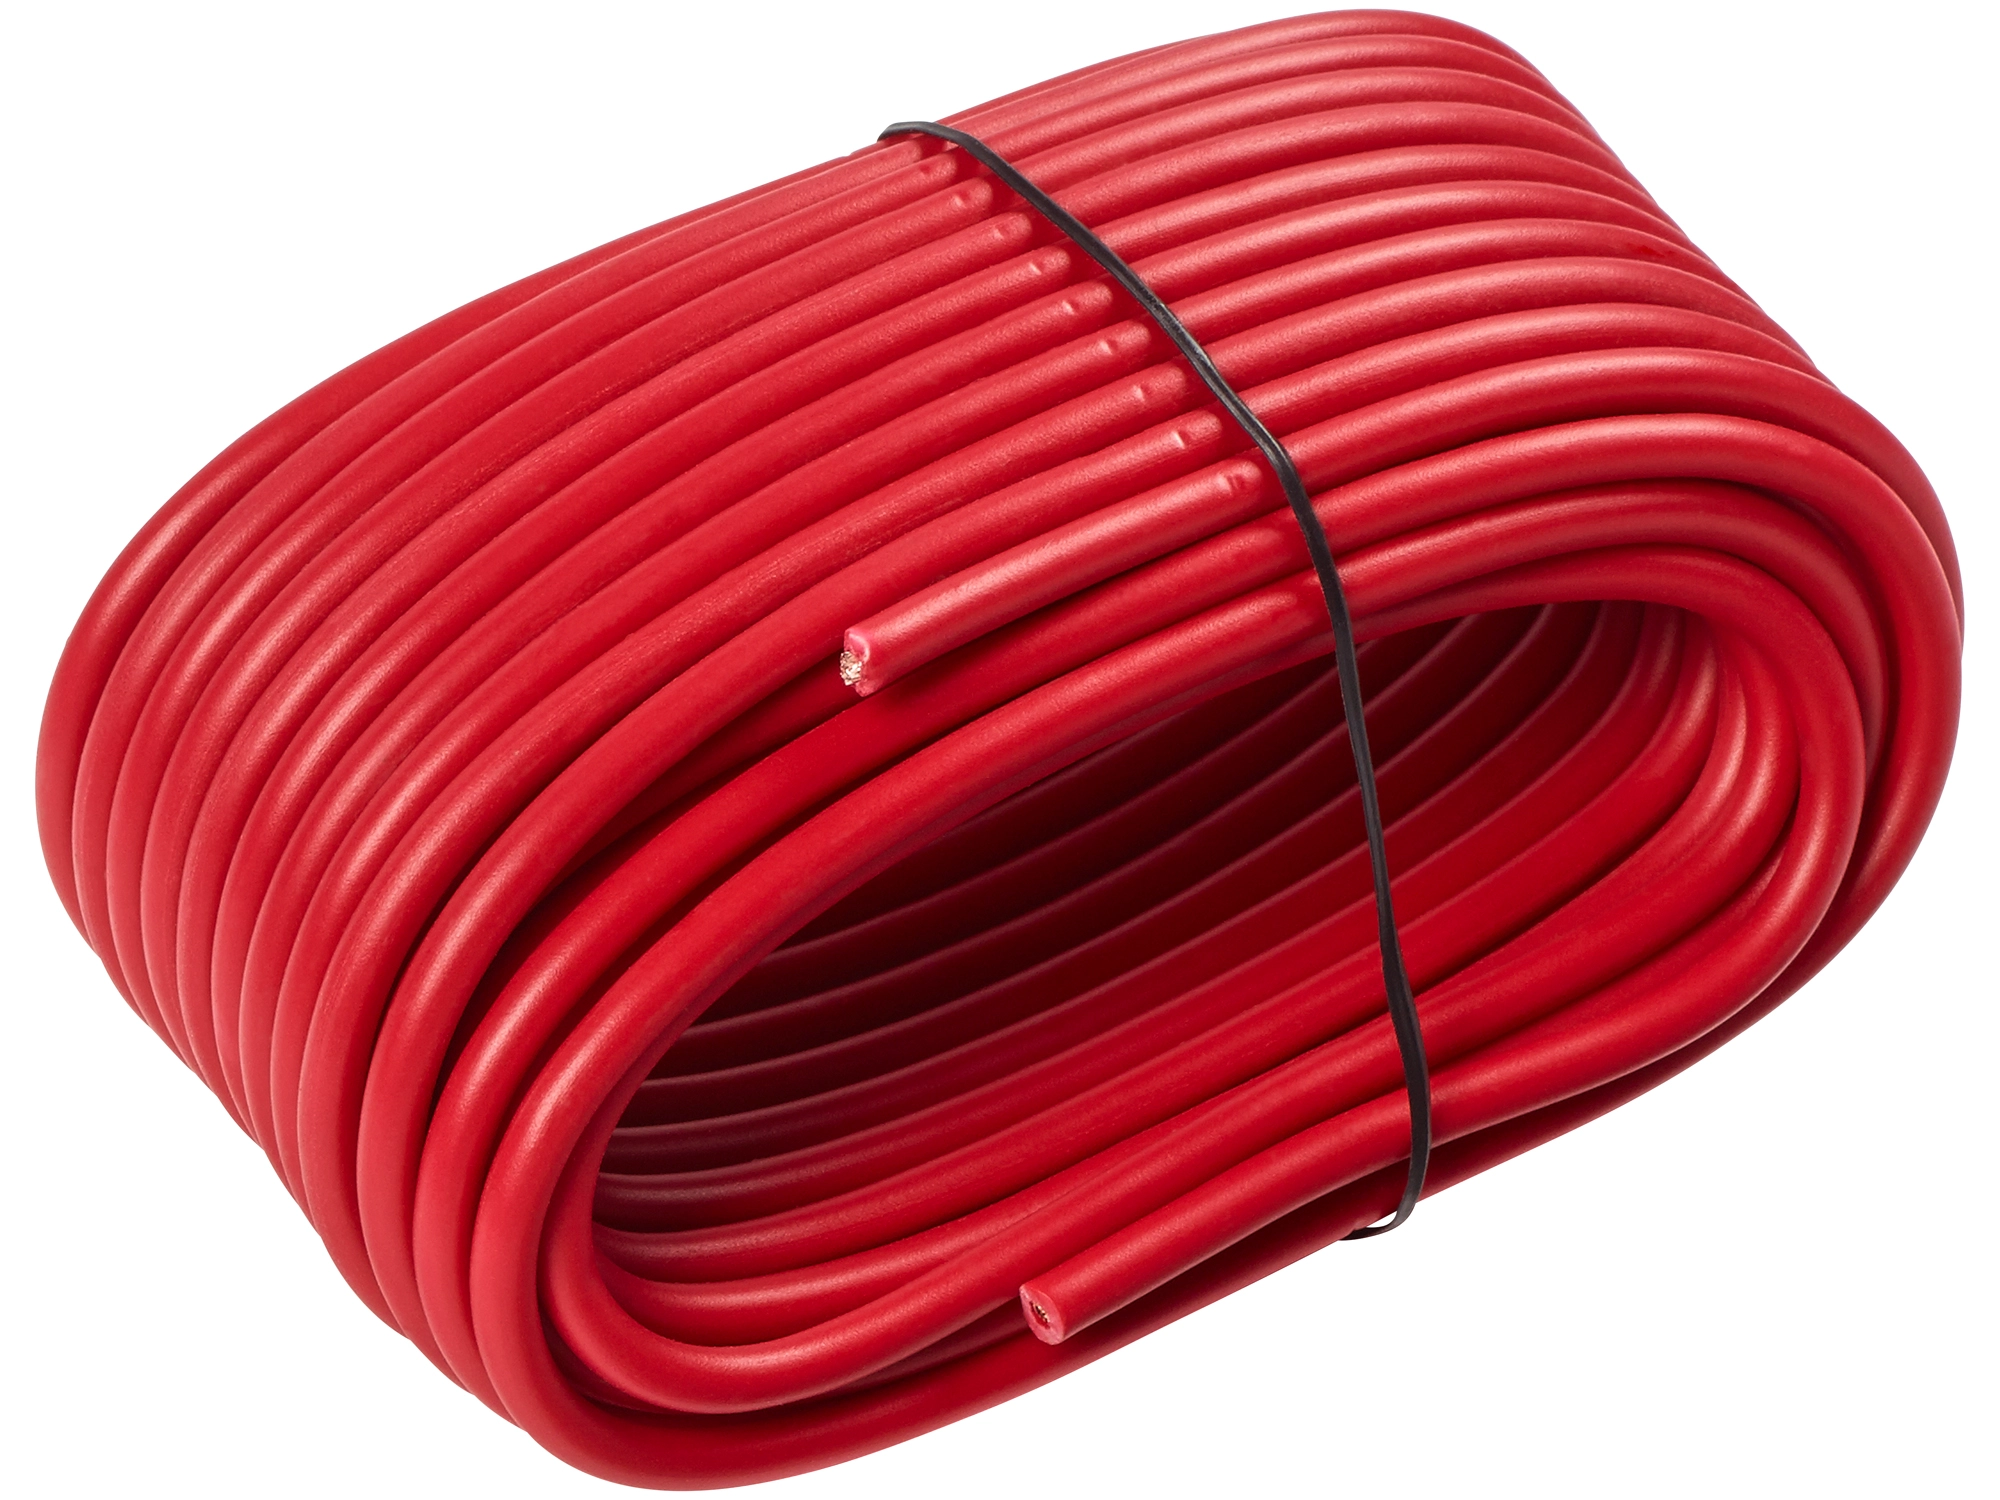 OBI Fahrzeugkabel 10 m Rot 10 m x 1,5 mm² kaufen bei OBI